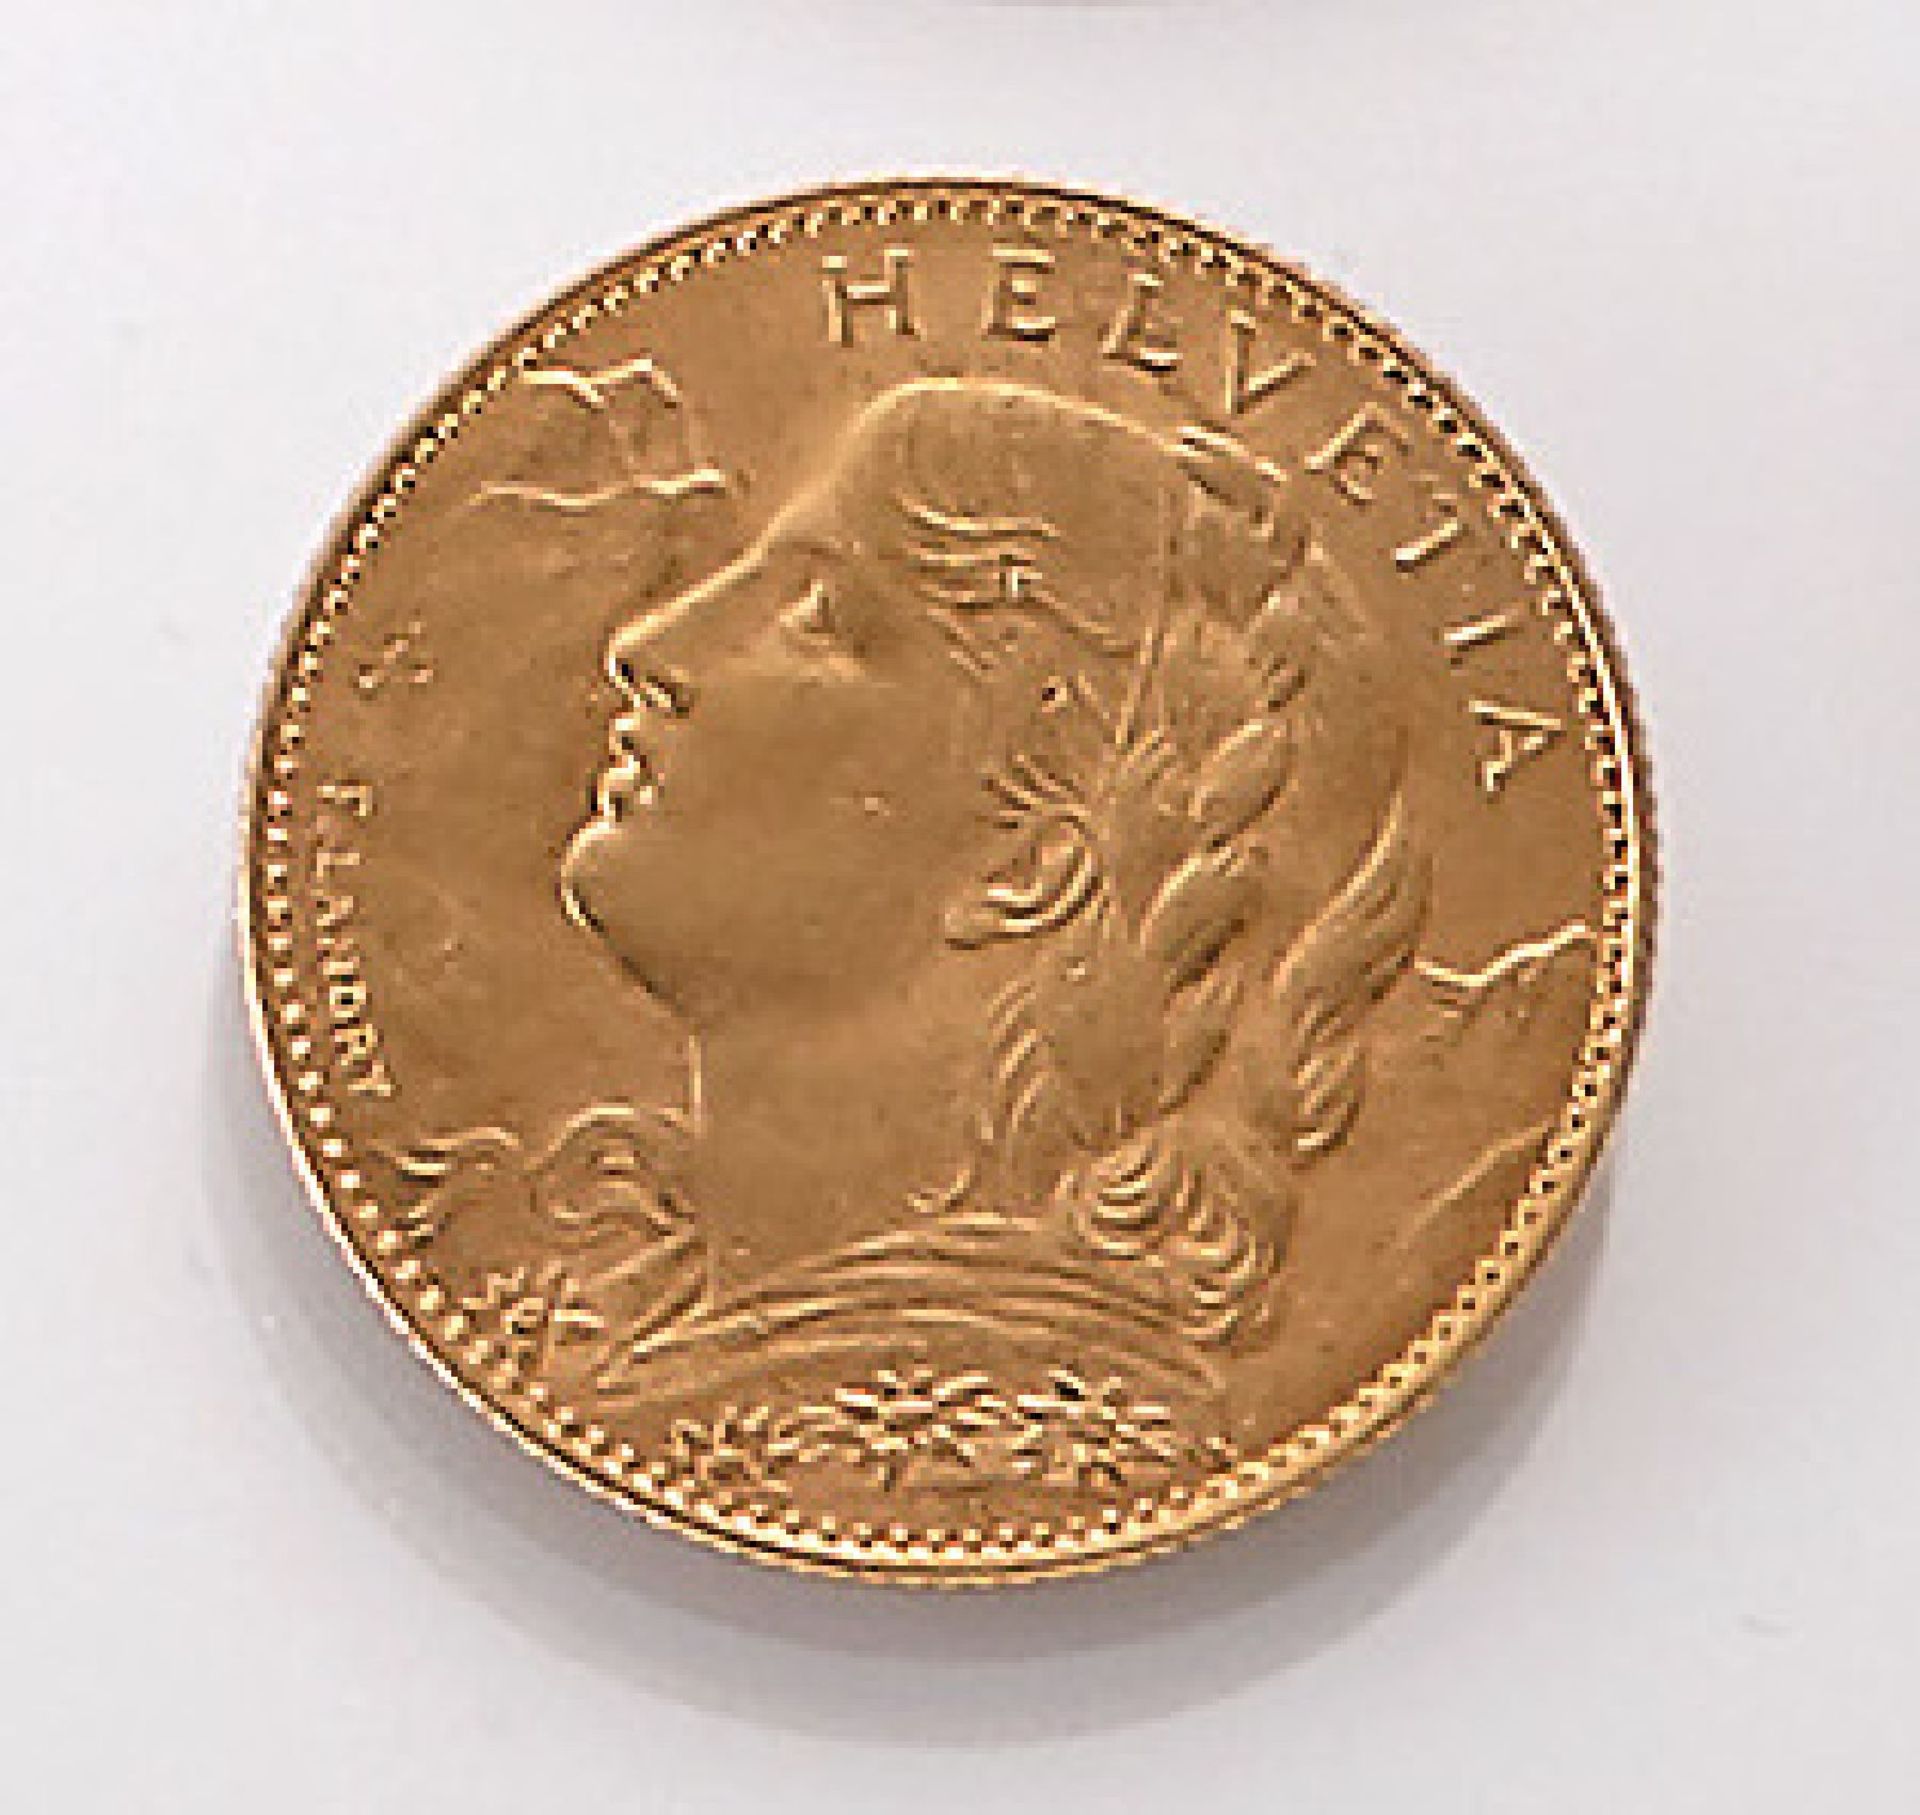 Gold coin, 10 Swiss Francs, Switzerland, 1916 , Helvetia, so-called Vreneli, impressed mark B